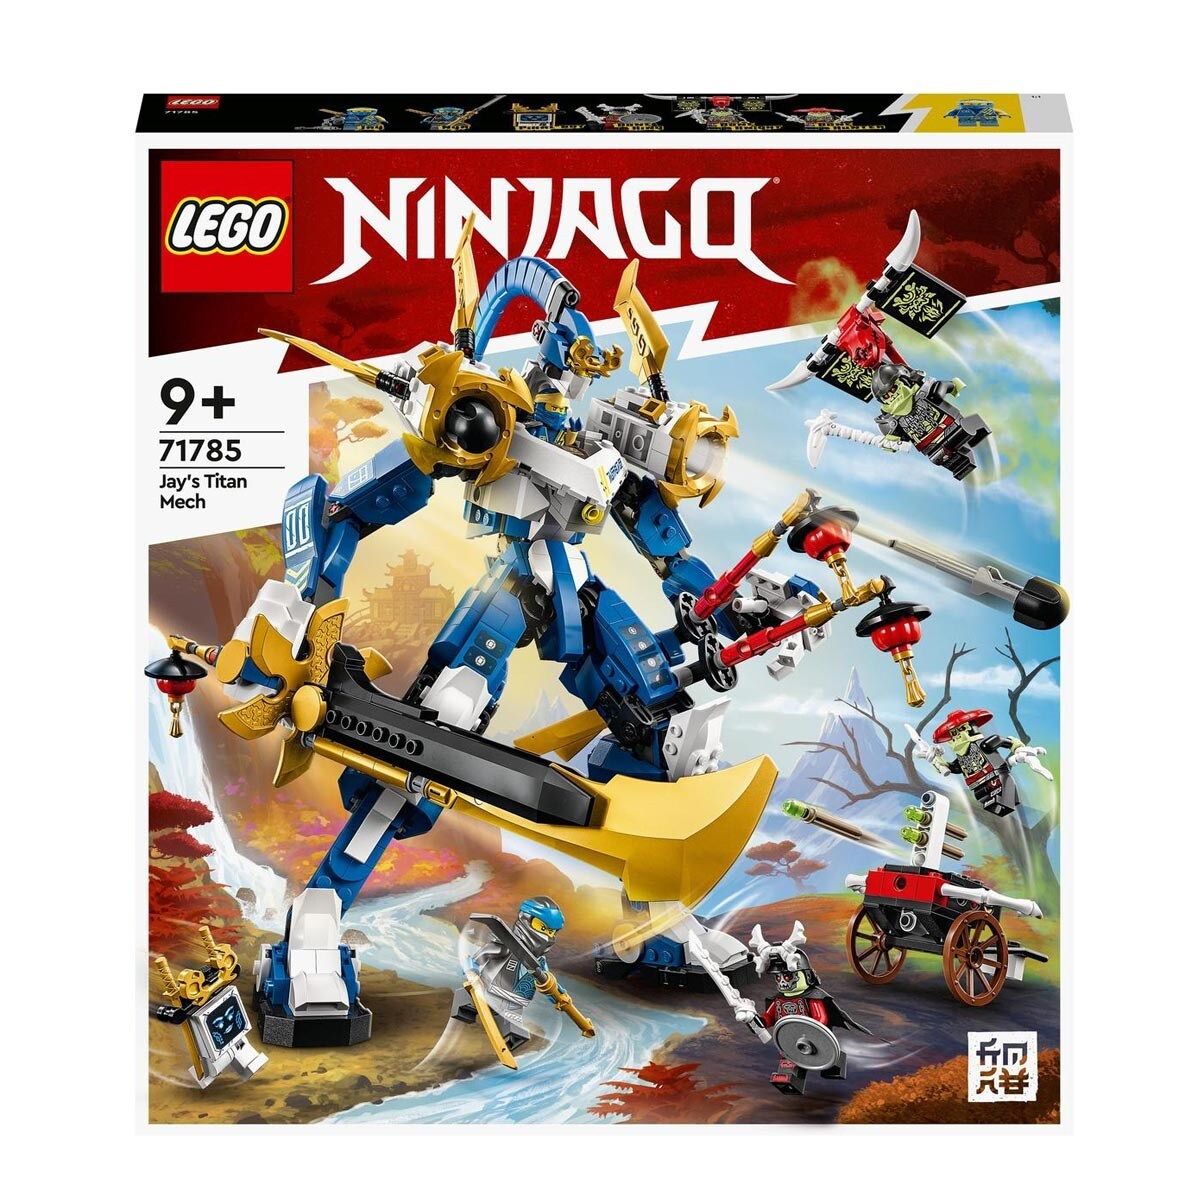 Jeux de construction Lego Ninjago - Lloyd, Arin, and Their Ninja Robot Team, Affiches, cadeaux, merch